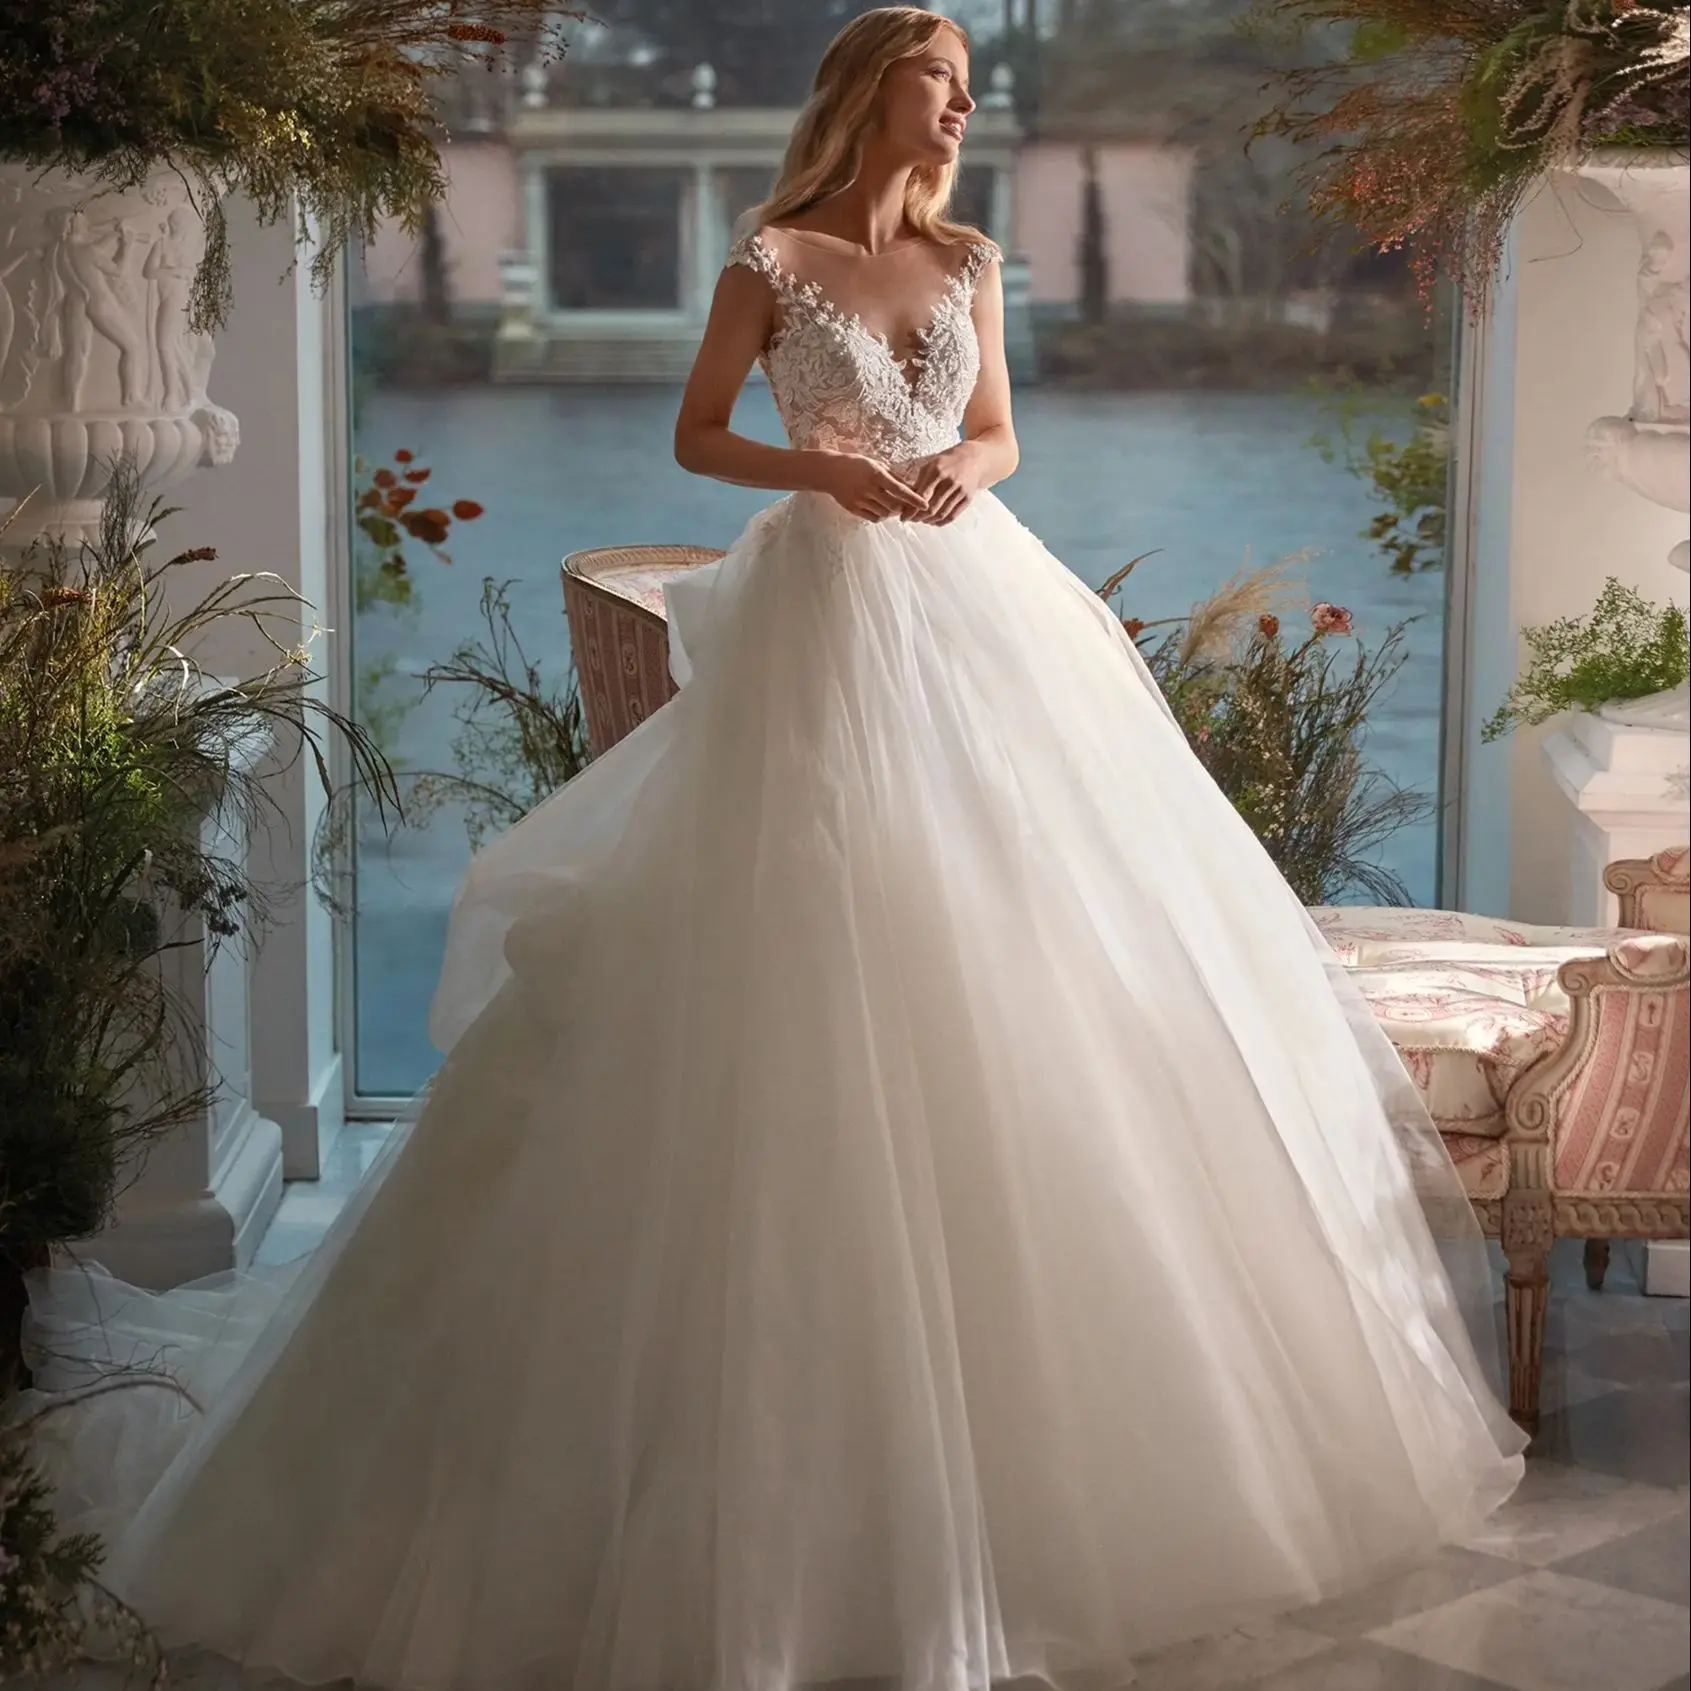 

Princess Wedding Dress iIllusion O-Neck Lace Appliqued Sparkly Sequins Backlesss Bridal Gown Tiered Ruffles Vestidos De Novia